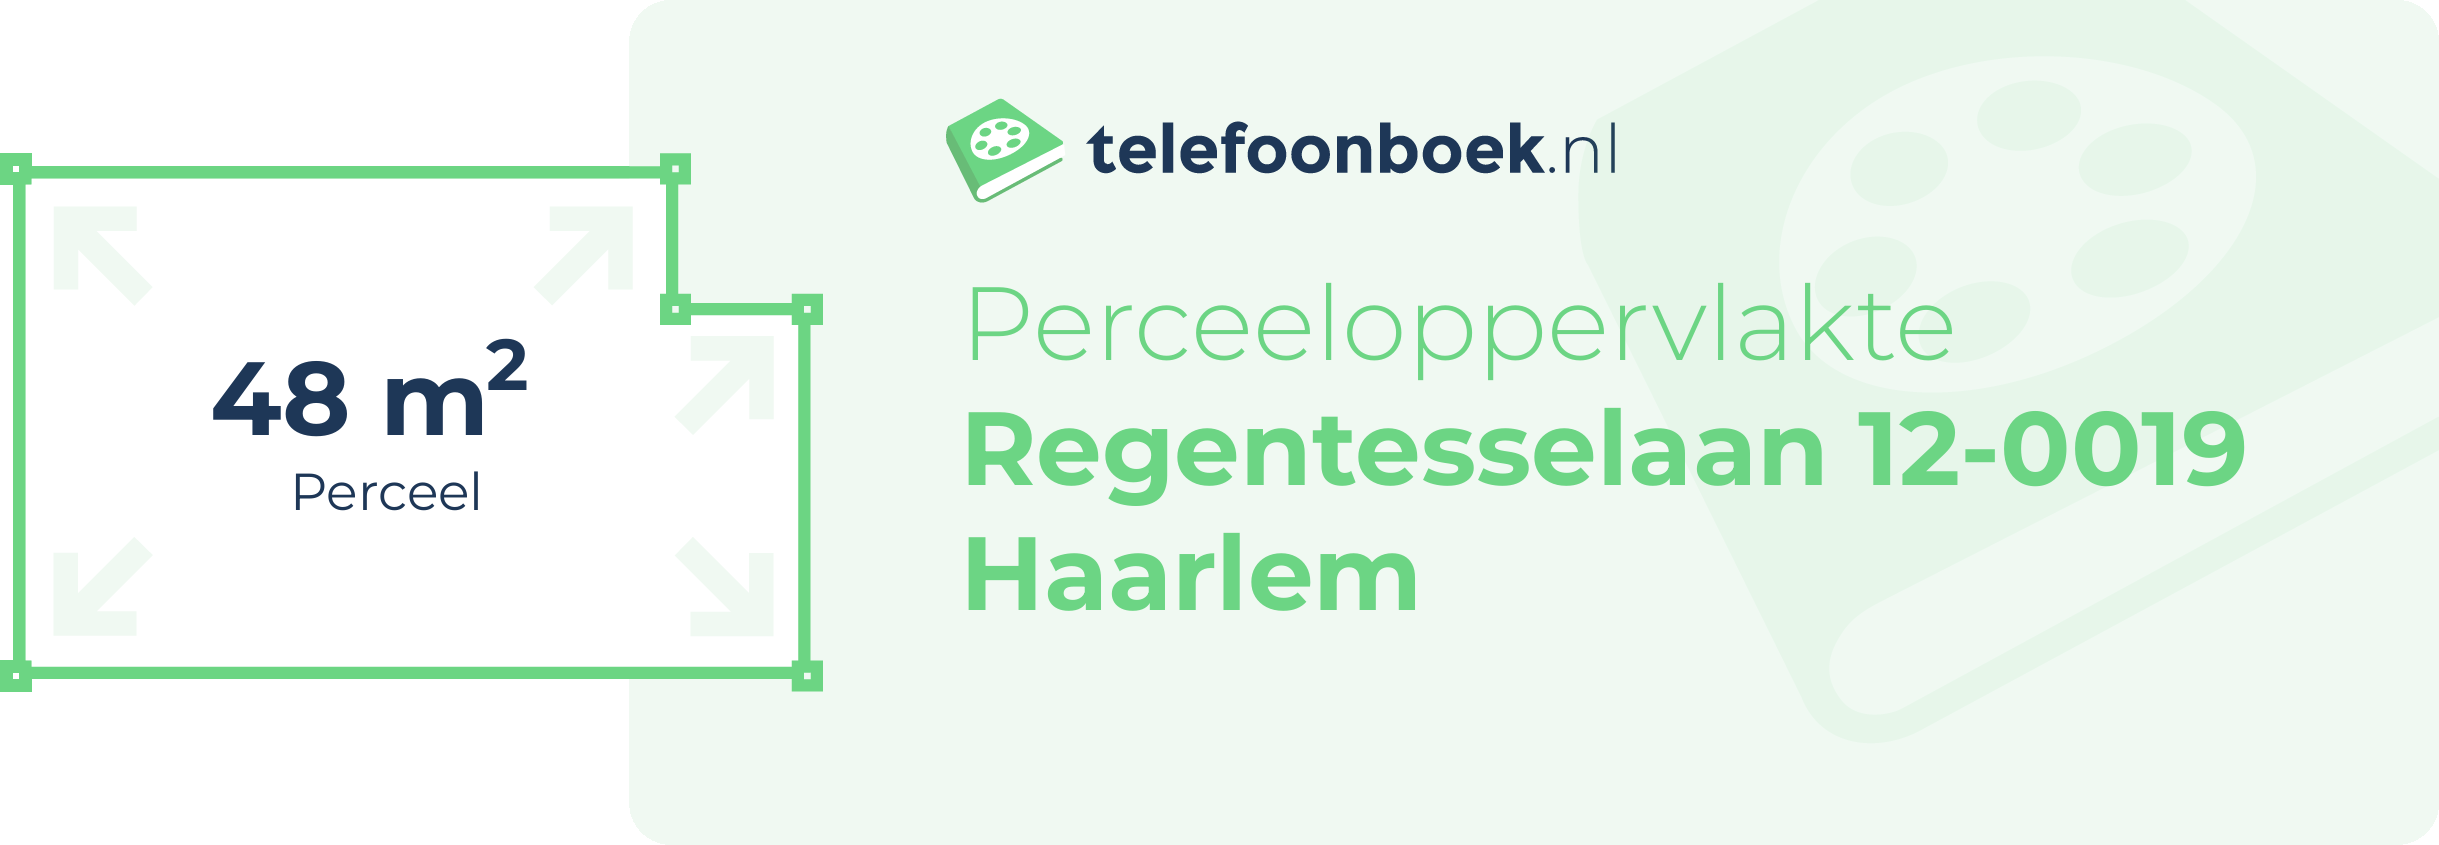 Perceeloppervlakte Regentesselaan 12-0019 Haarlem